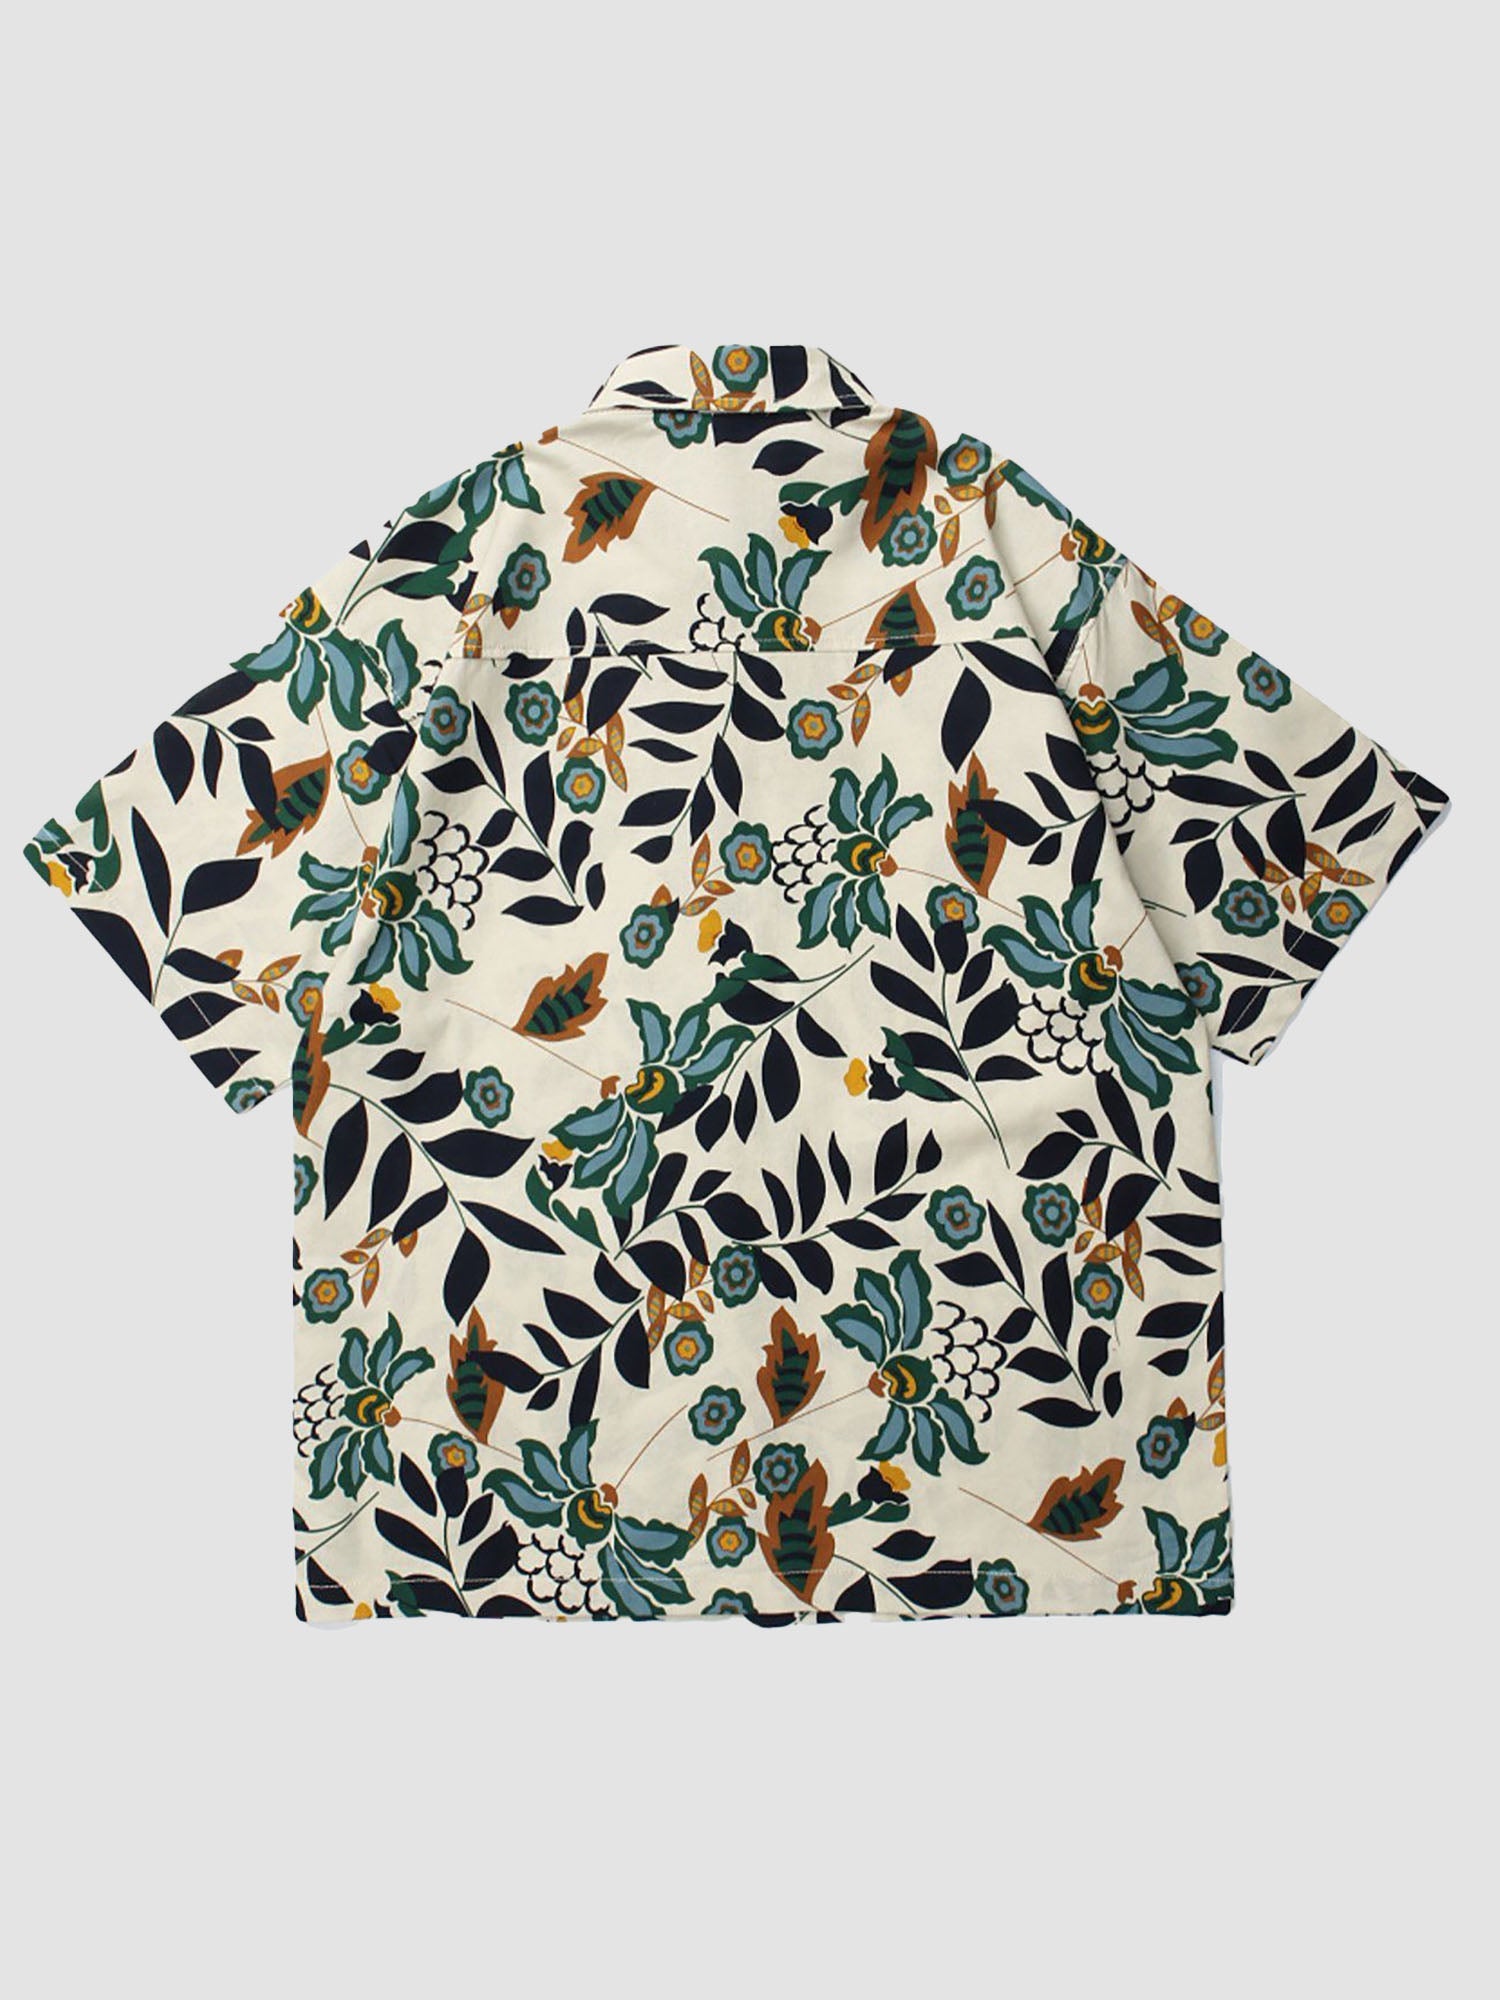 JUSTNOTAG Vintage Floral Printed Short Sleeve Shirts